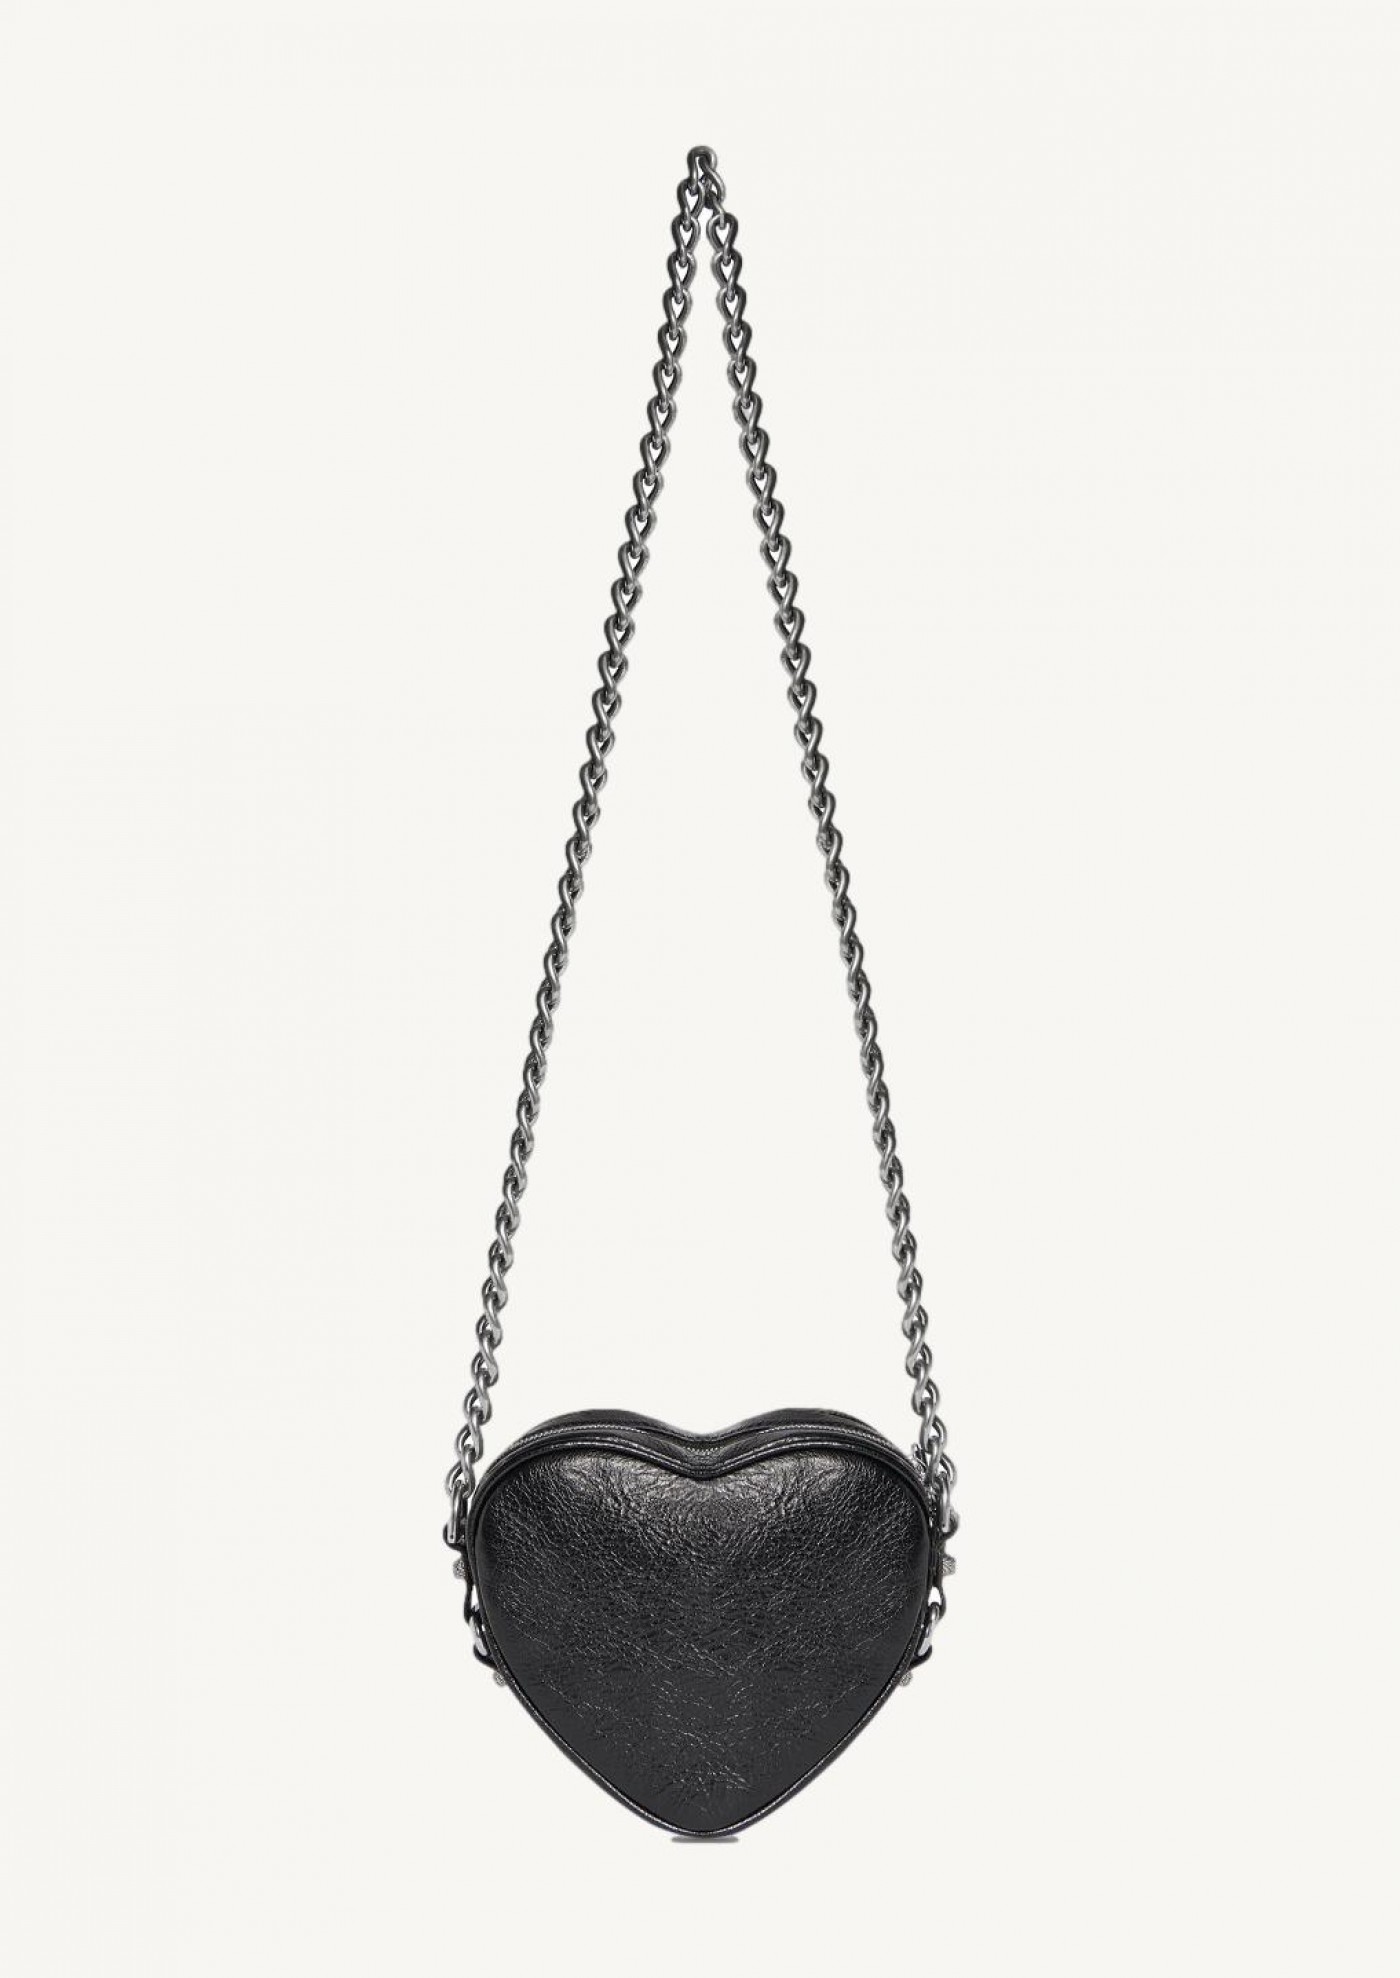 Le sac Cagole Heart mini noir